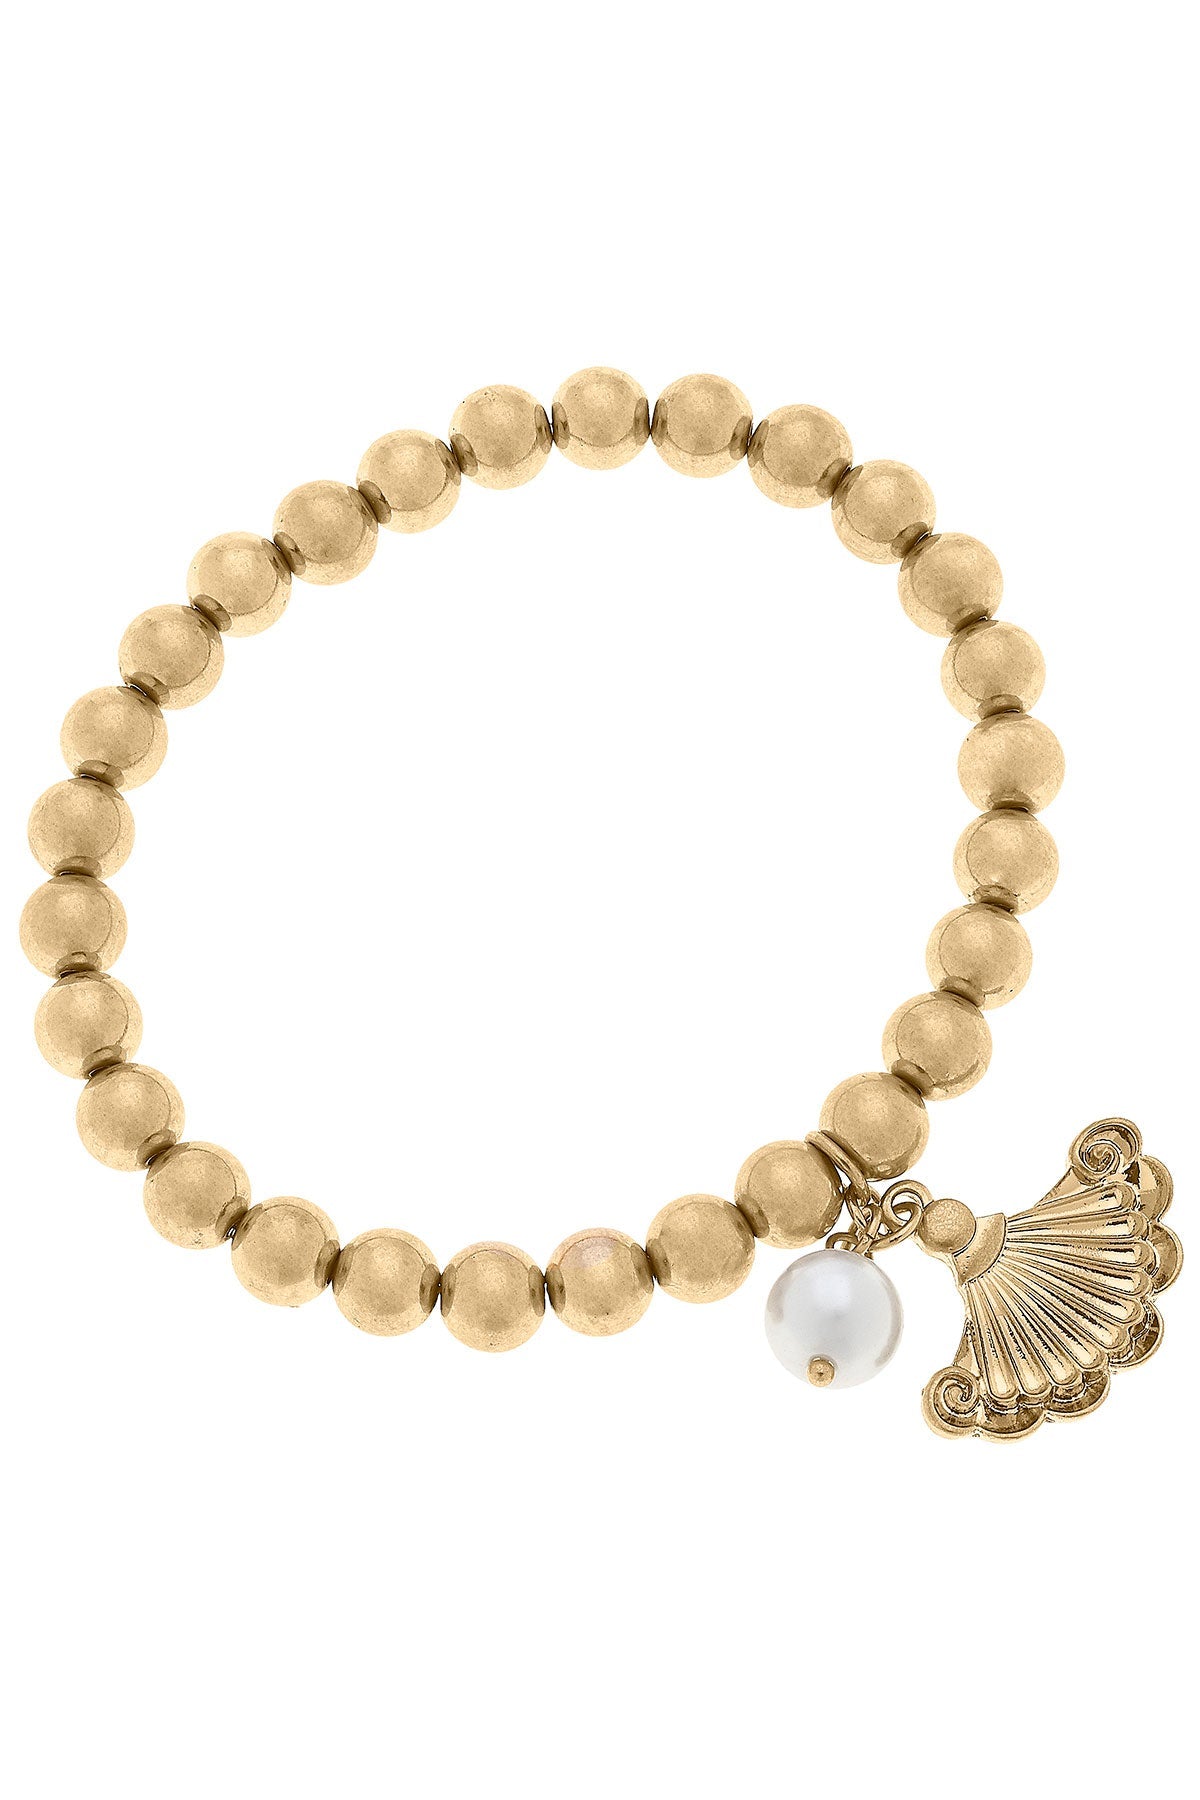 Brigitte French Fan & Pearl Charm Ball Bead Stretch Bracelet in Worn Gold